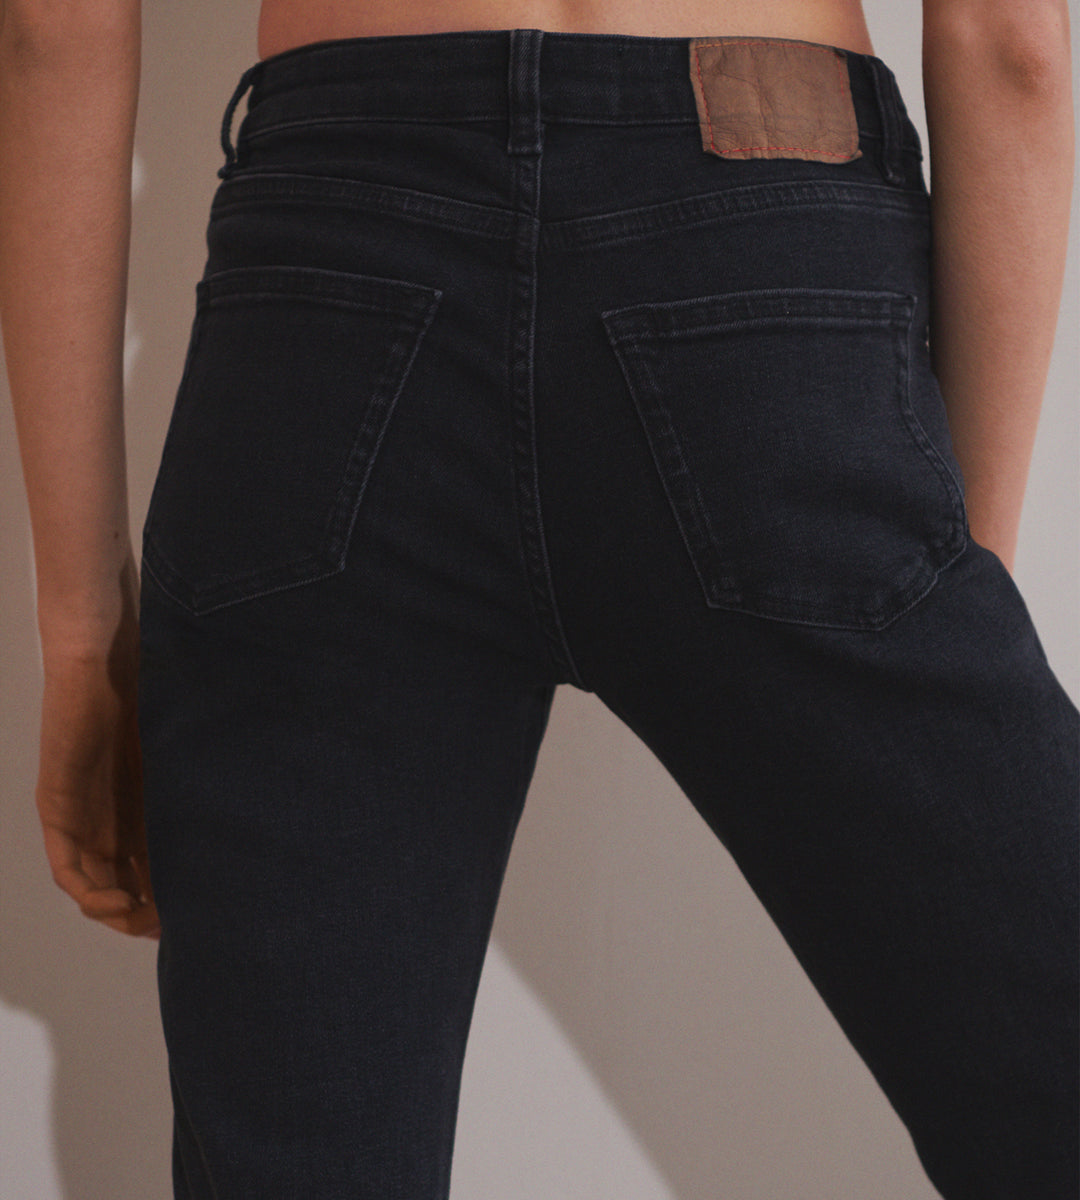 Jeanerica | Women's Midtown 5-Pocket Jeans | Used Black